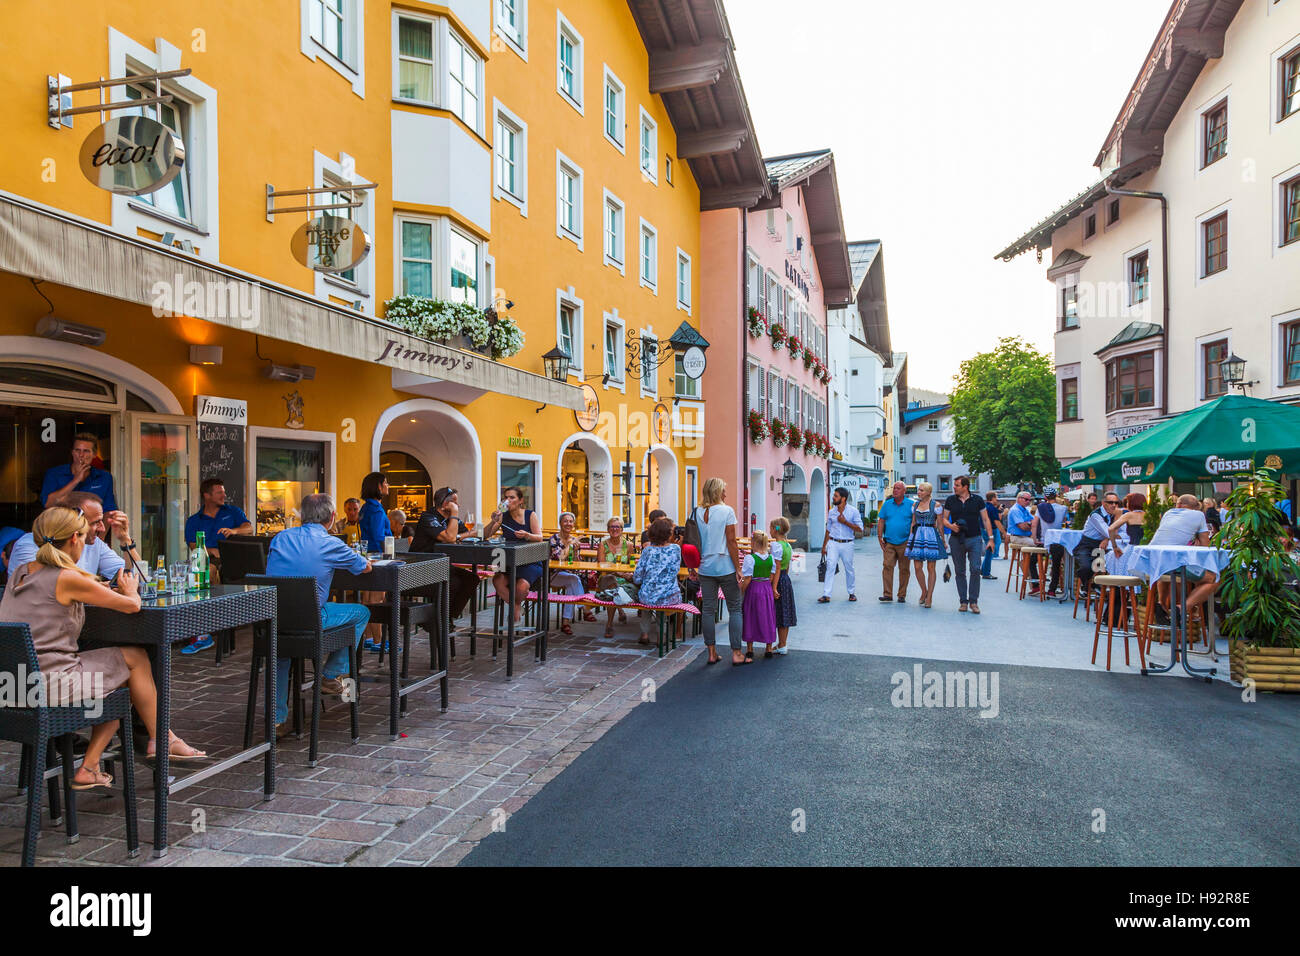 Il Jimmy's bar e cafe, HINTERSTADT distretto, città vecchia, KITZBUHEL in Tirolo Tirolo, Austria Foto Stock